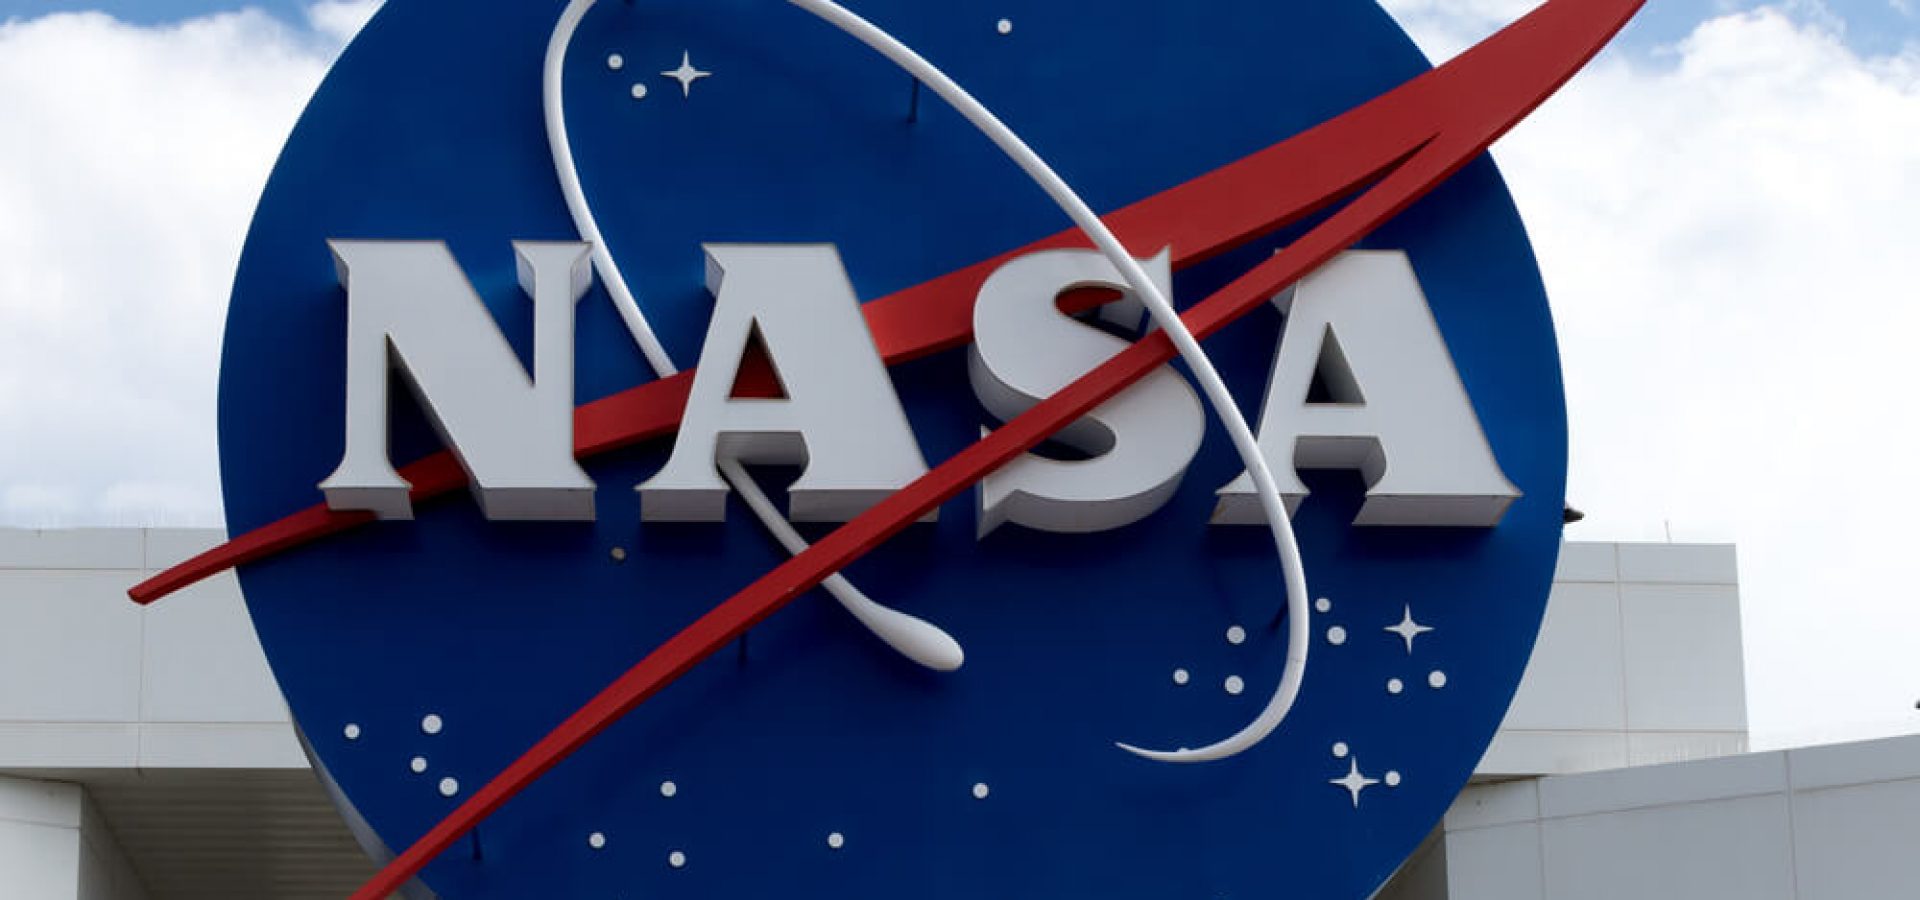 NASA logo with blue cloudy sky background